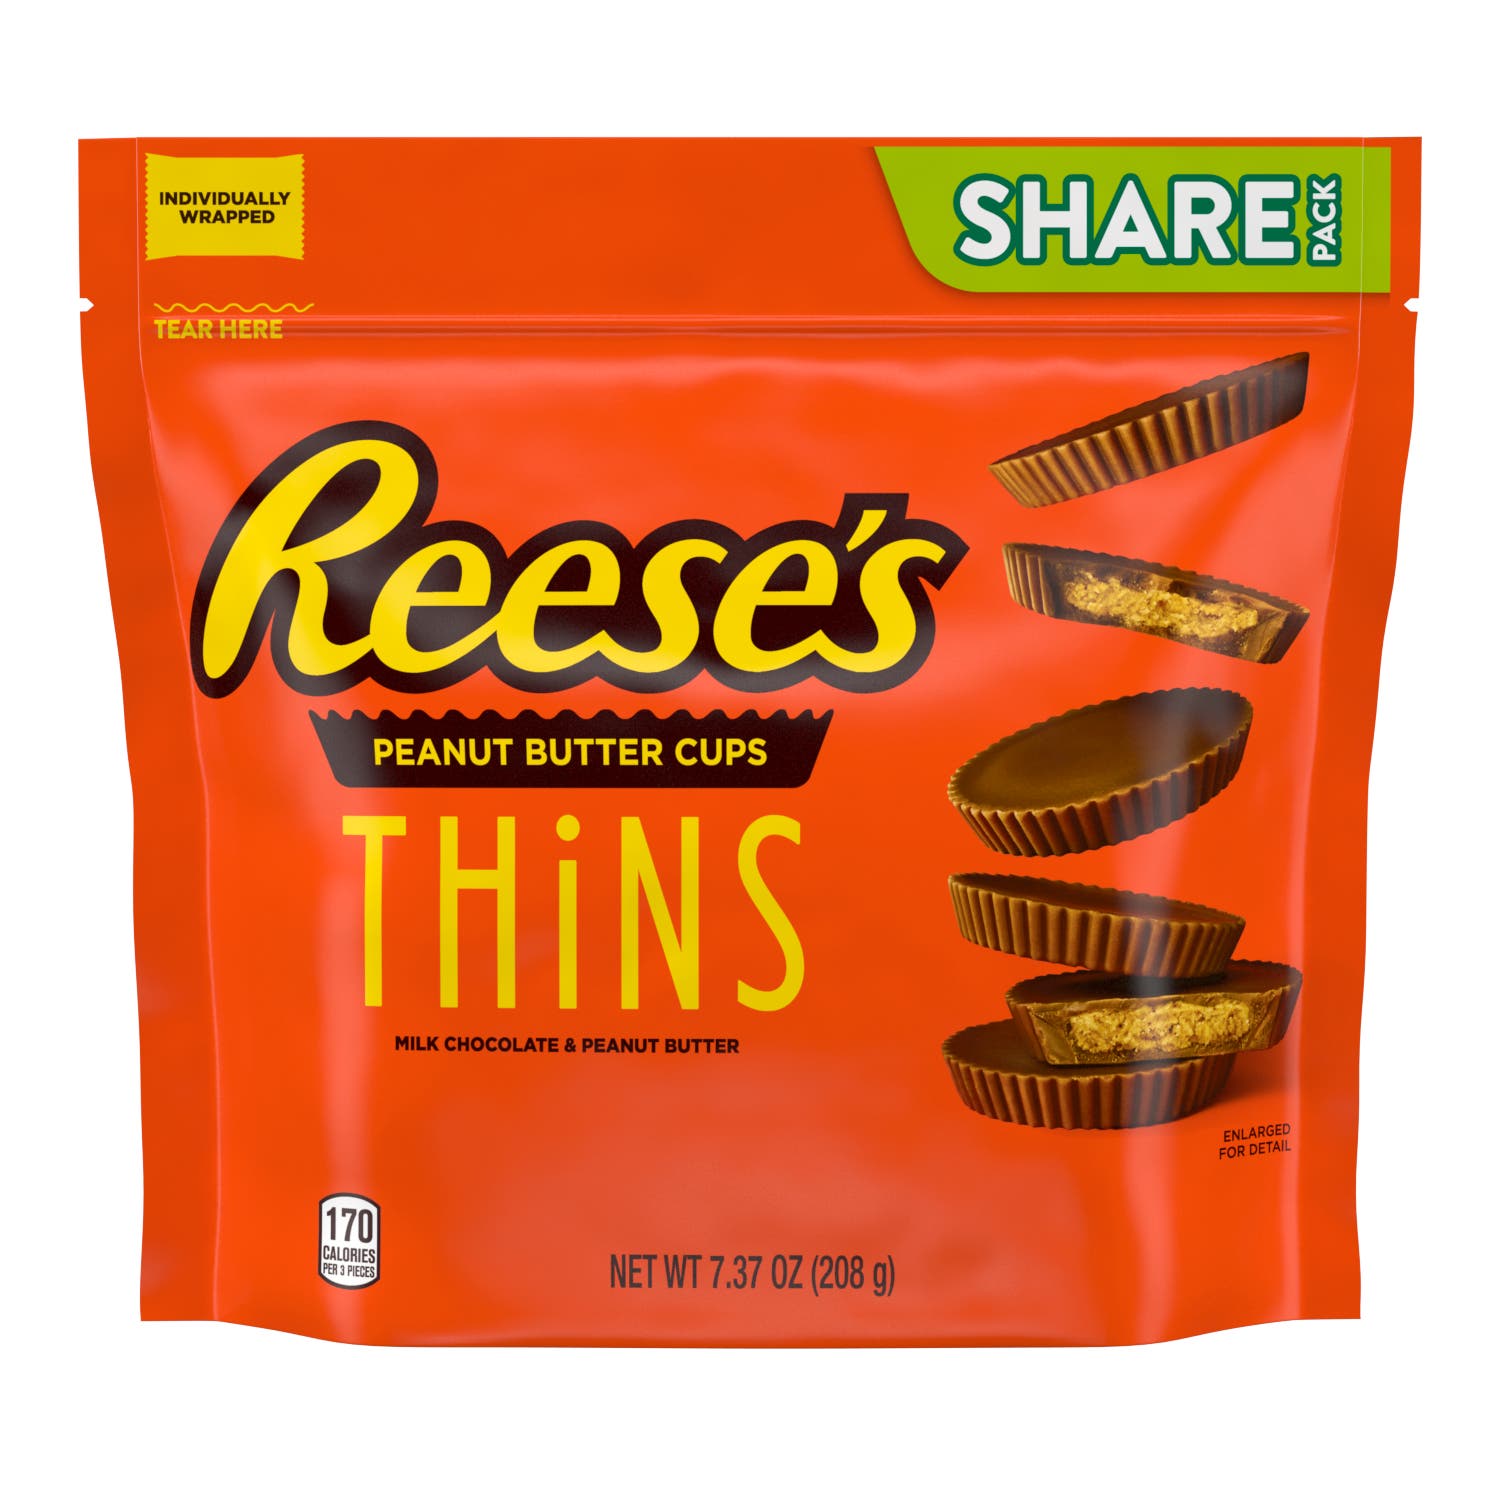 Imagem da embalagem do REESE'S Peanut Butter Cups Thins.